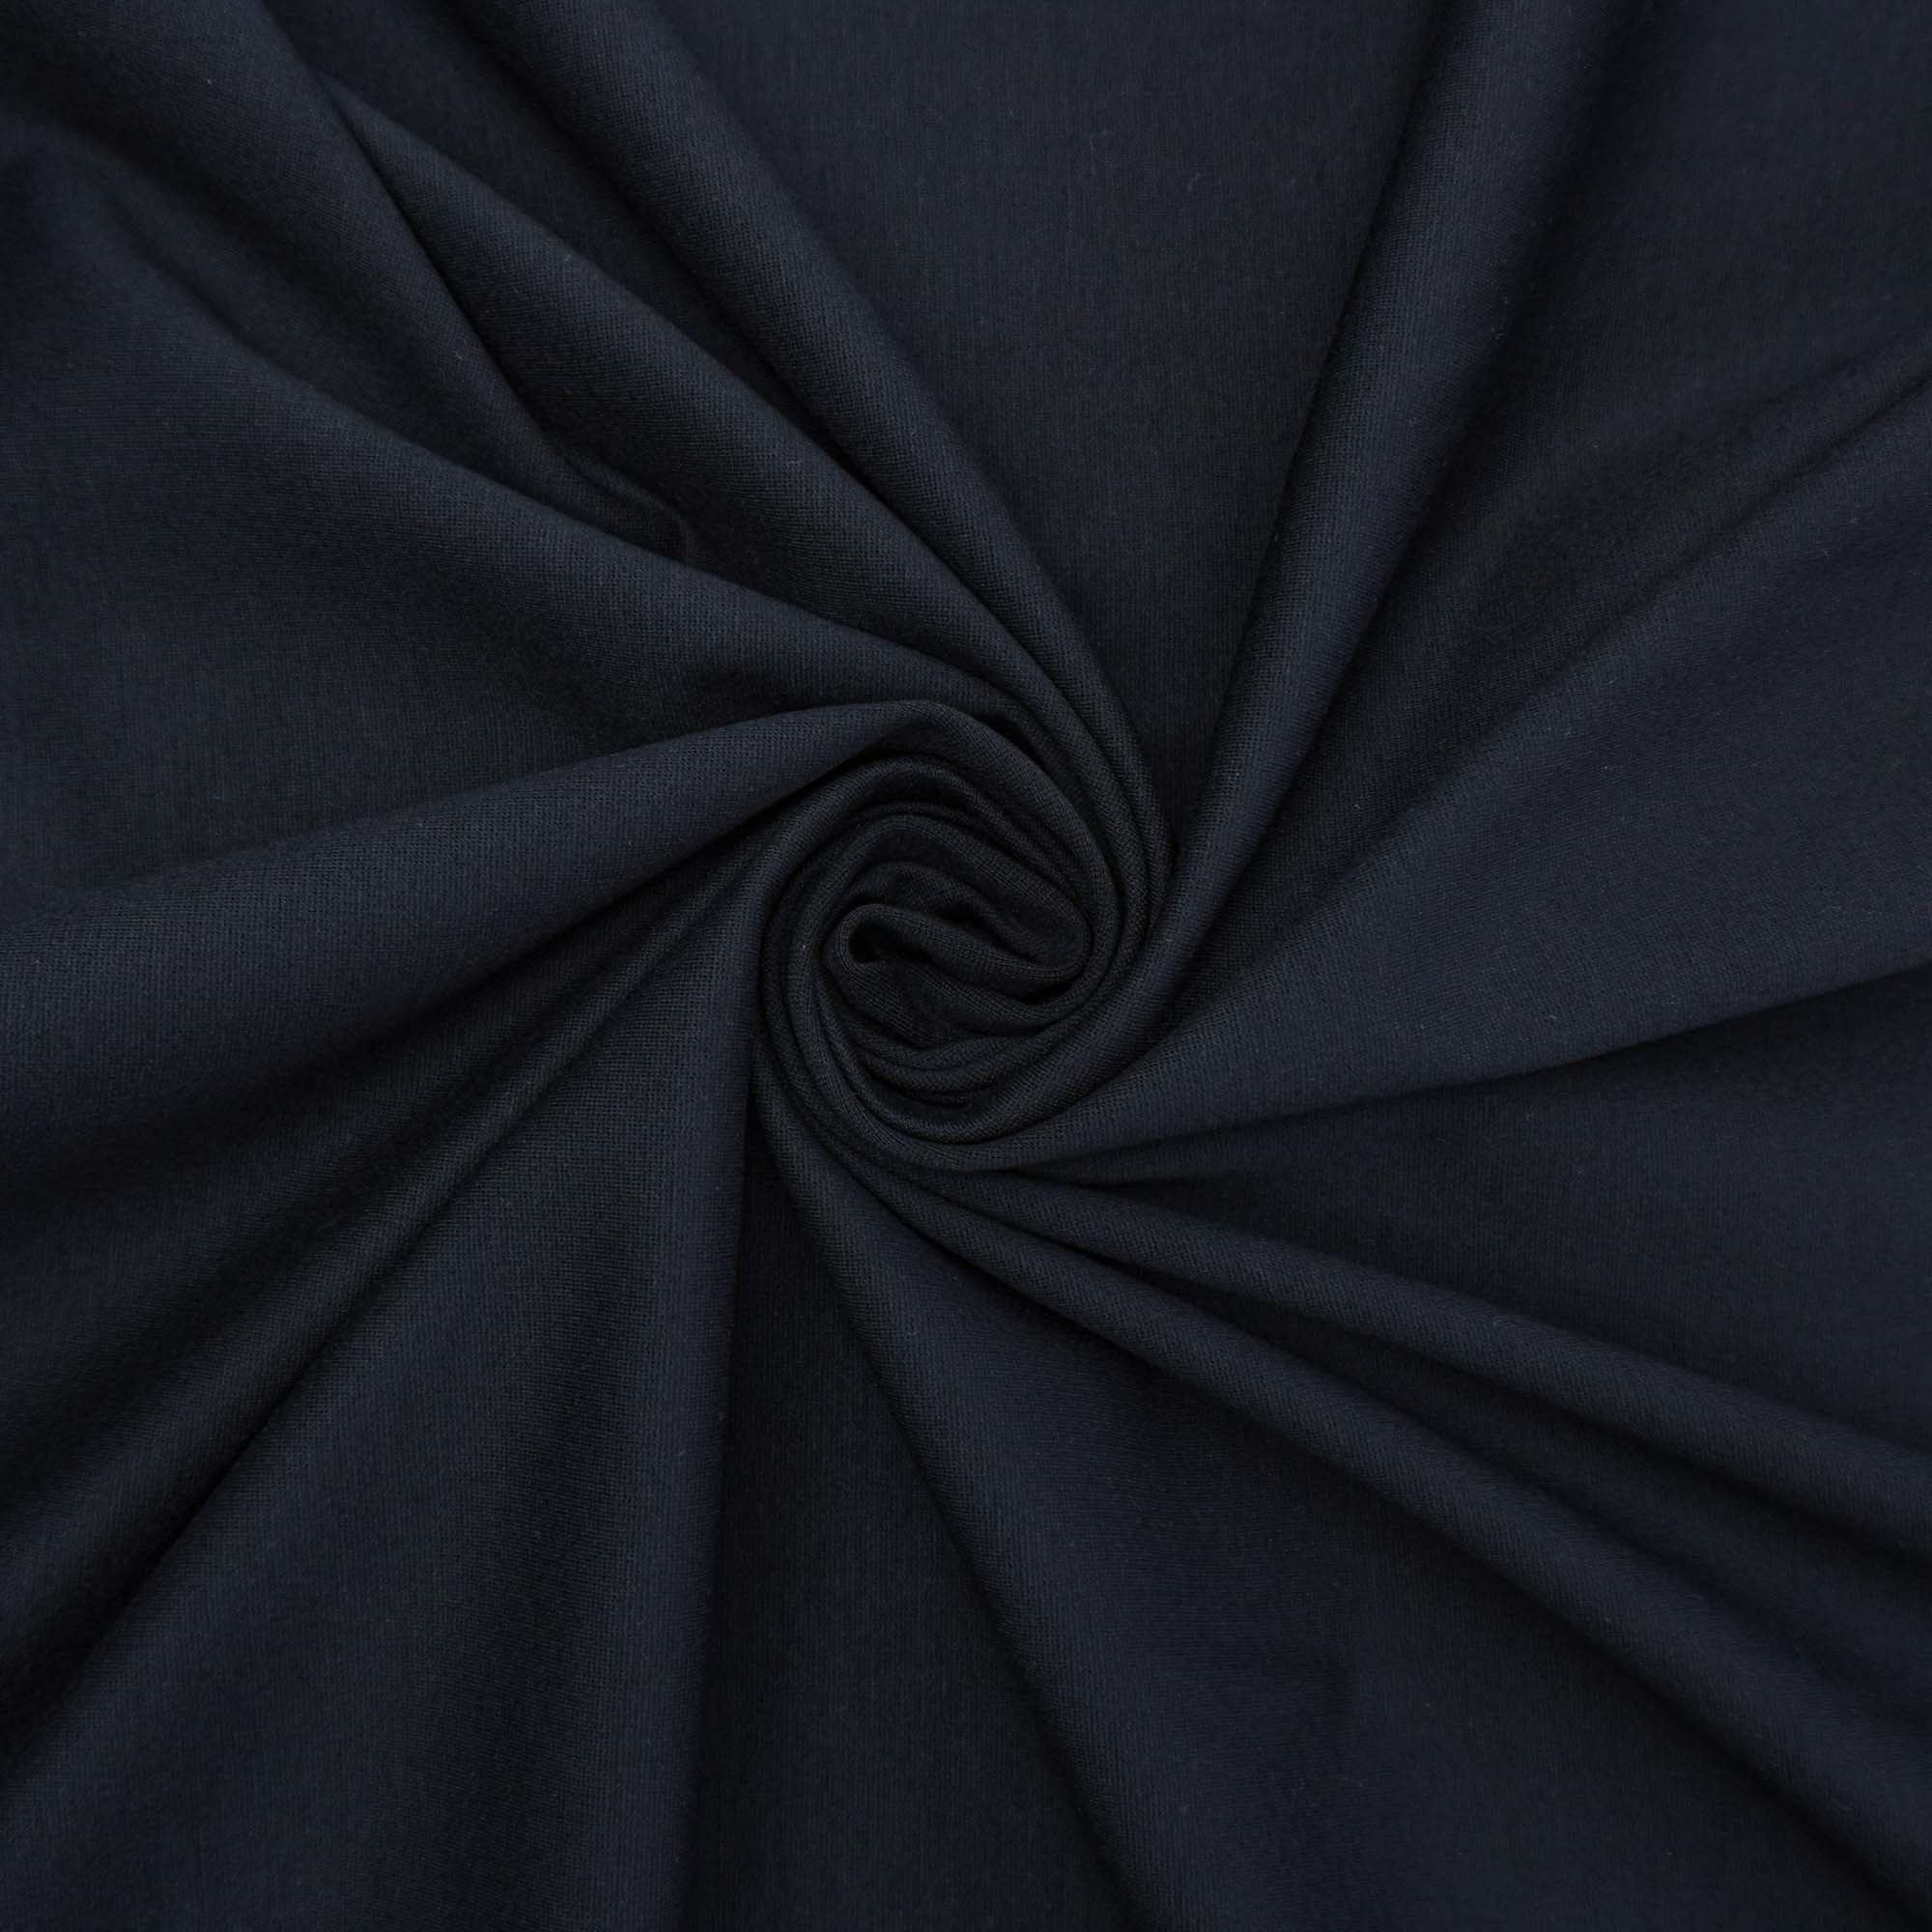 Tecido alfaiataria de malha italiana preto (tecido italiano legítimo)